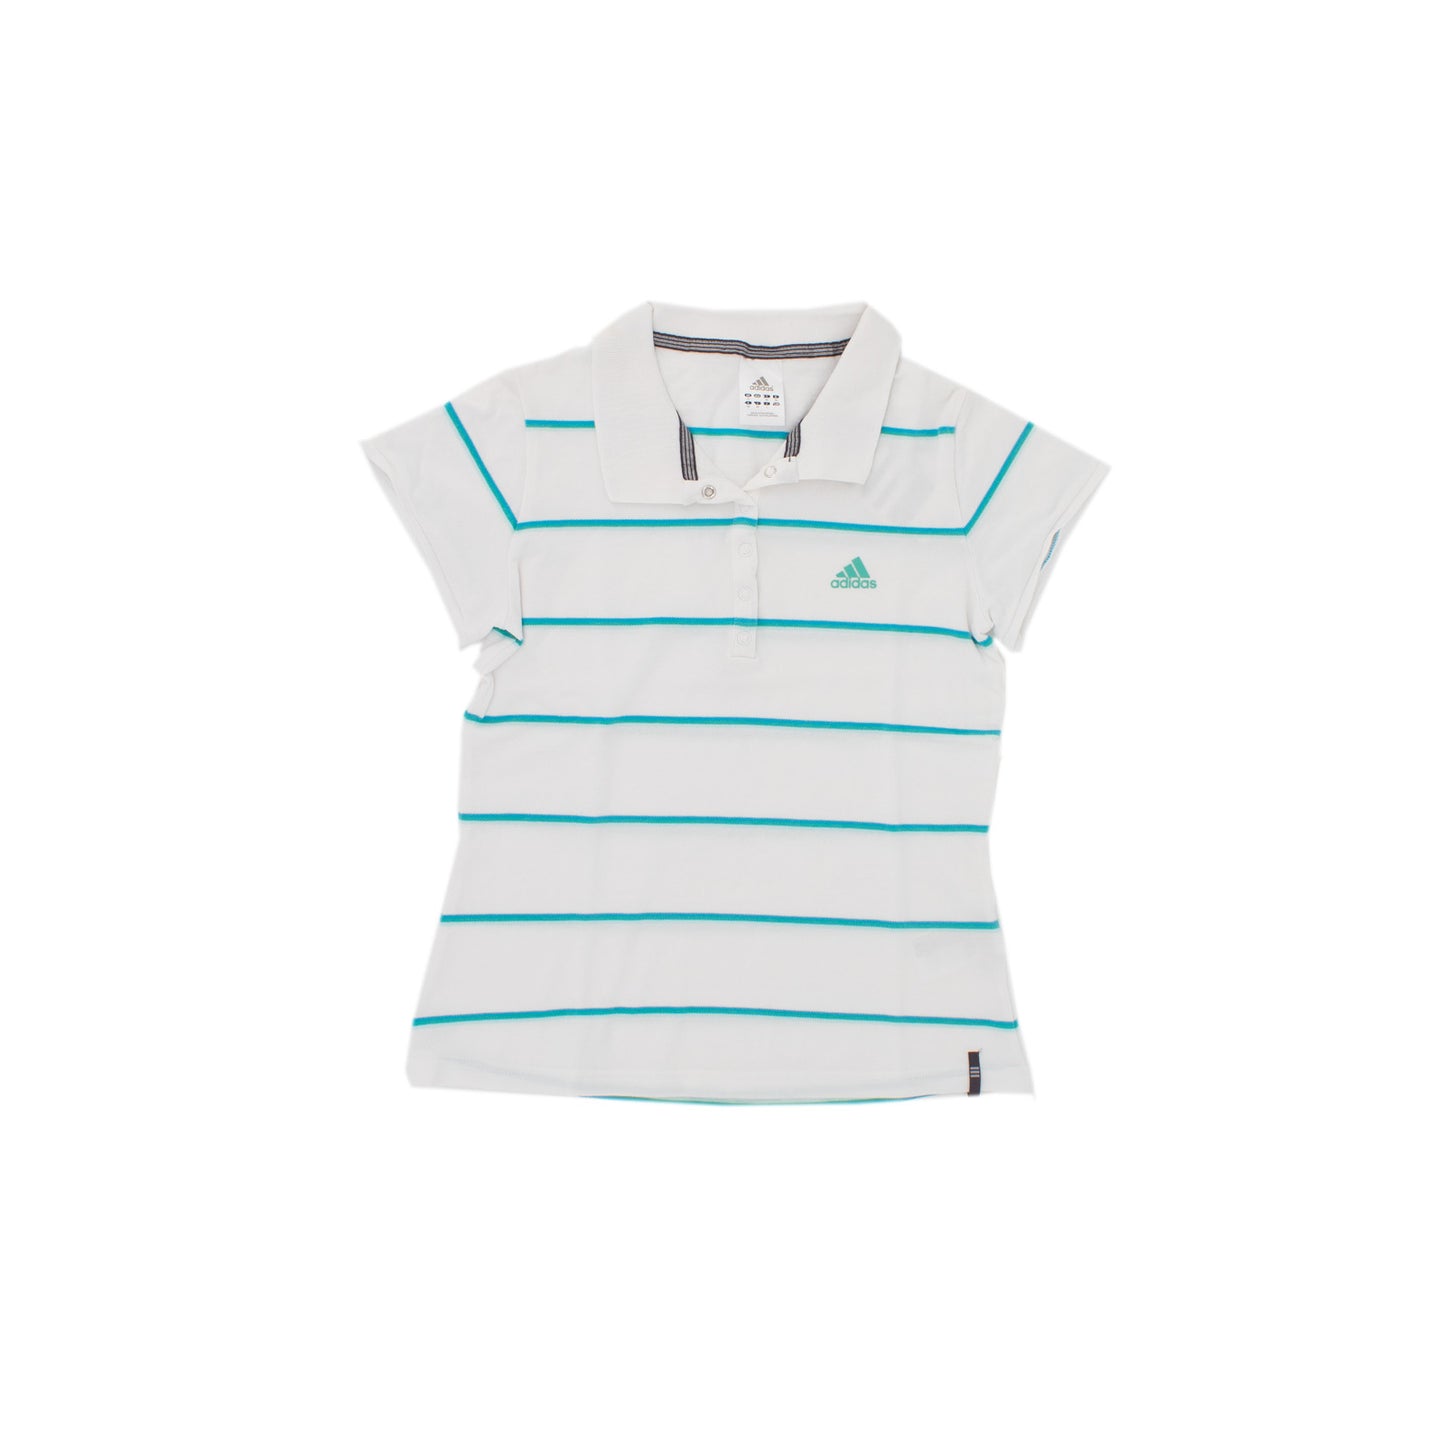 Adidas CBE Polo Shirt Damen Tennis T-Shirt Sportshirt Weiß 617090 Gr. 38 / M